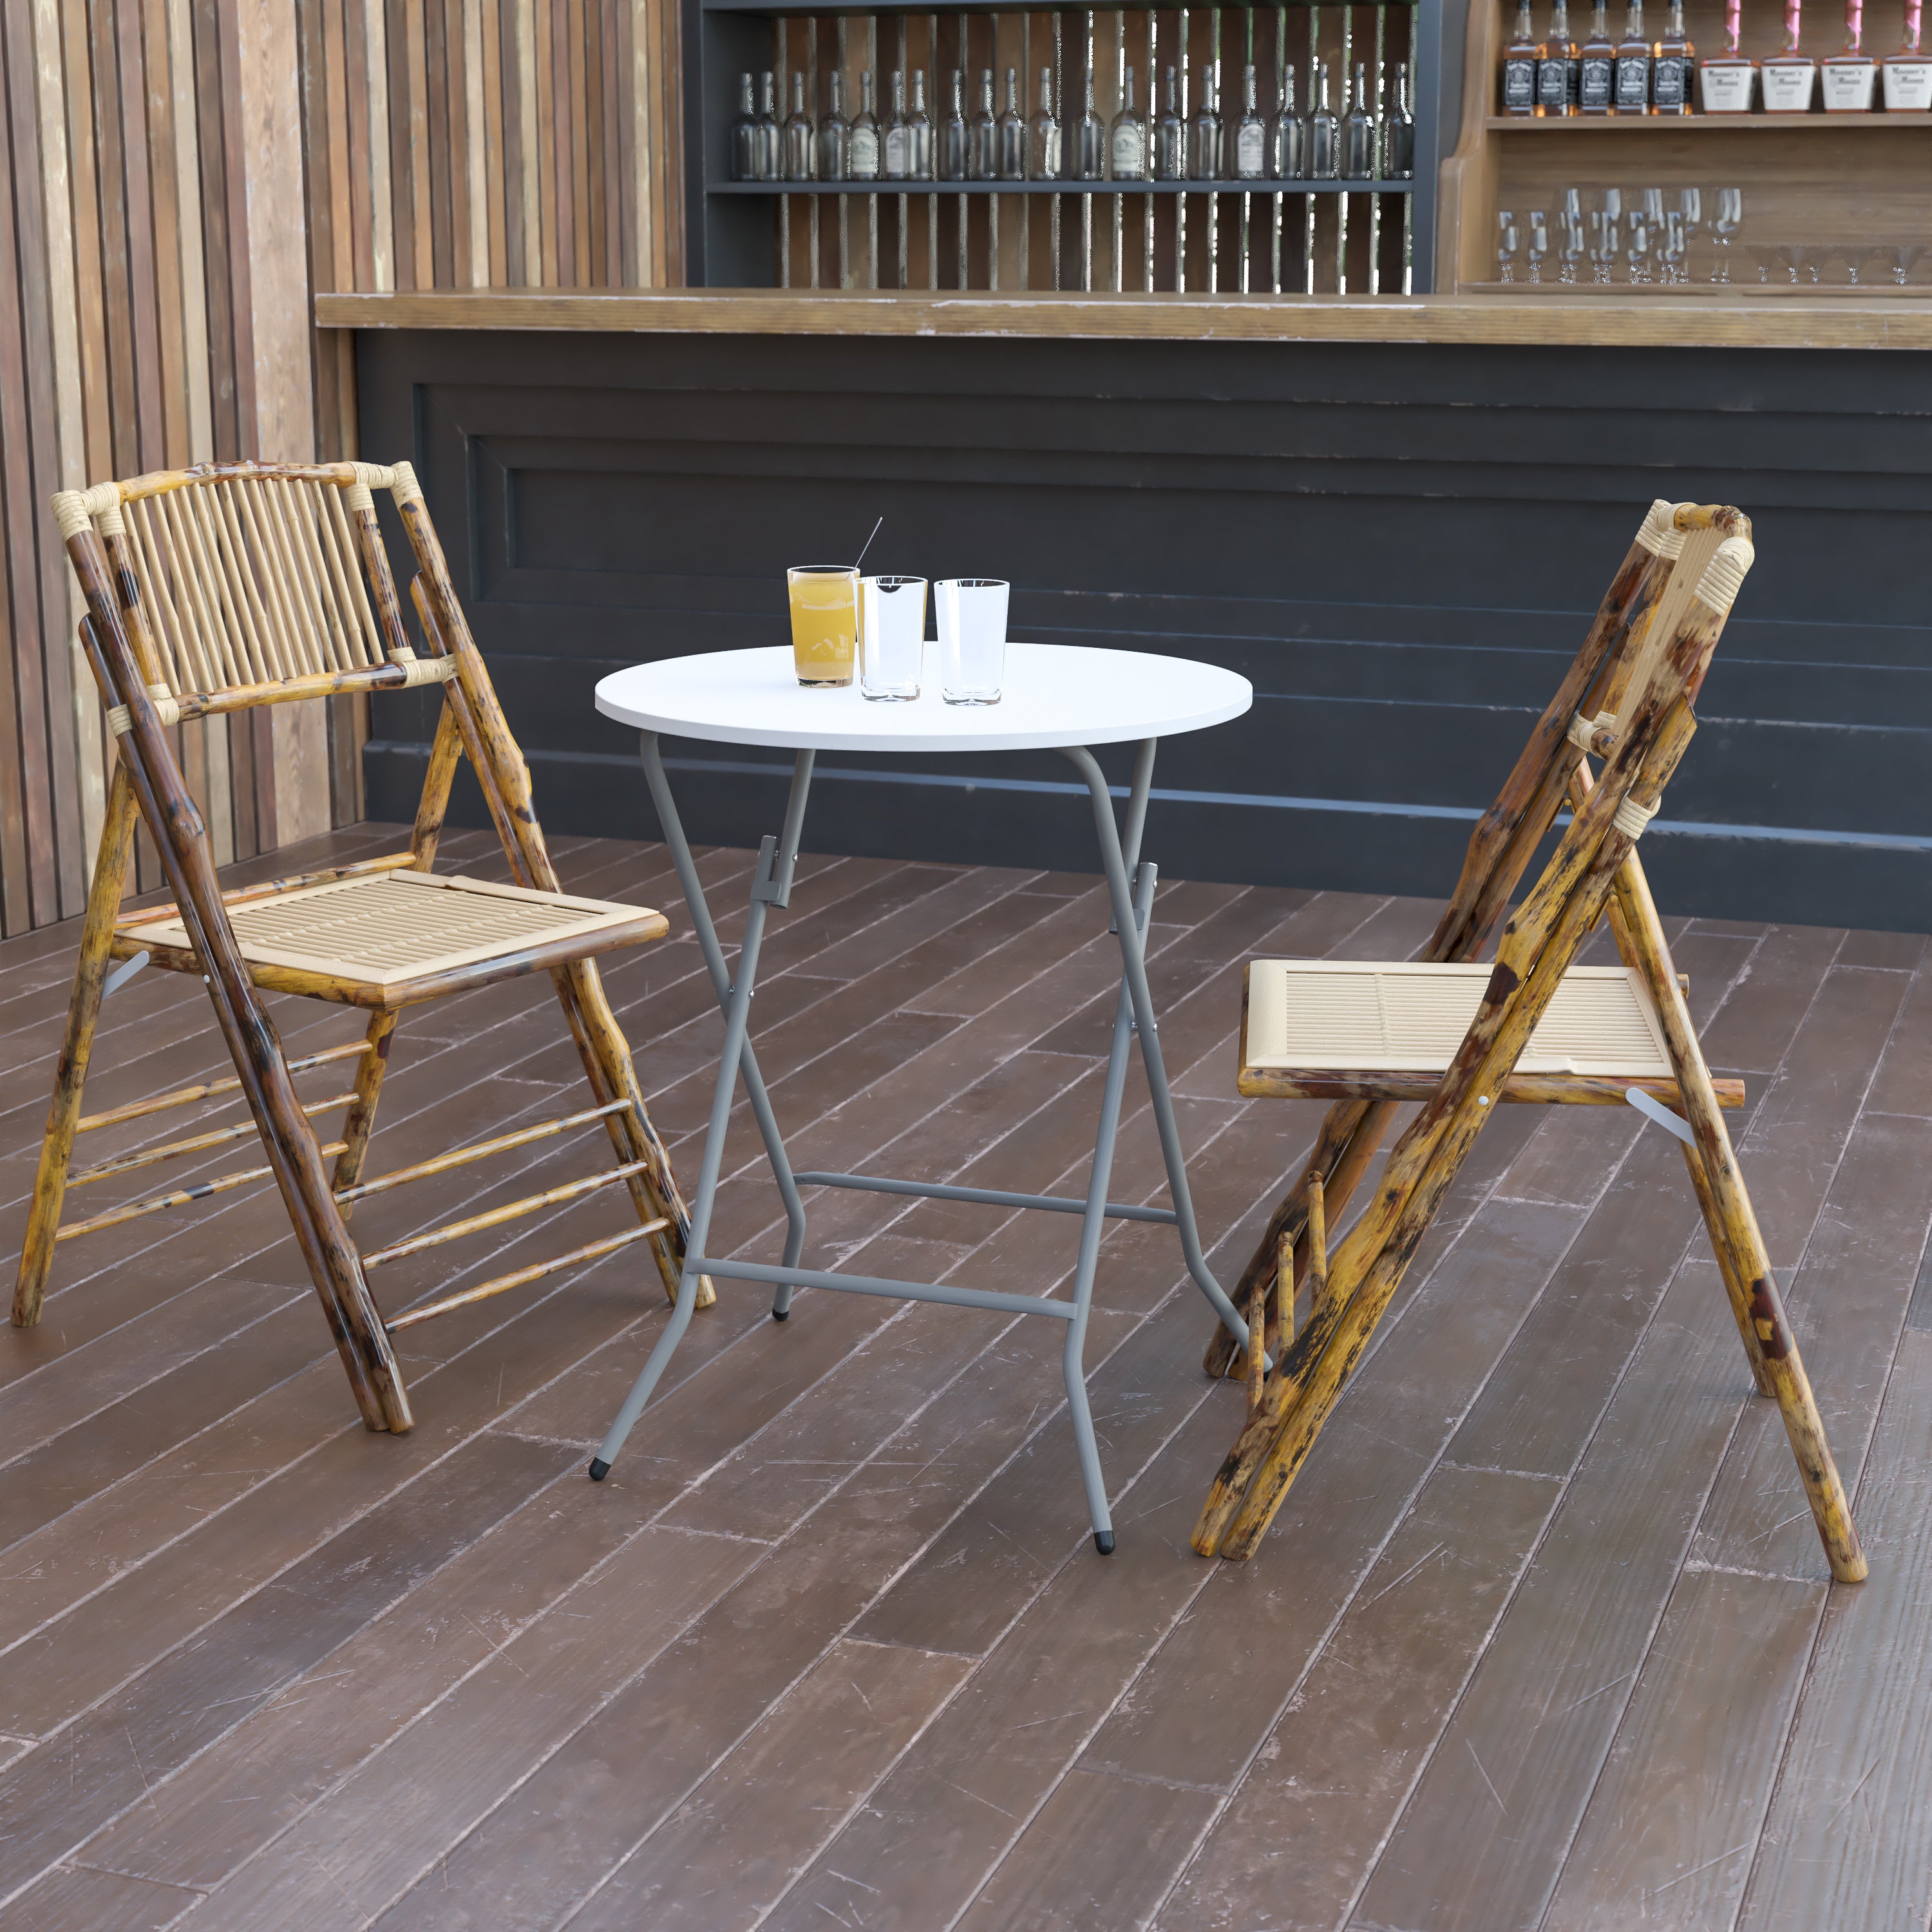 2-Foot Round Plastic Folding Table-Round Plastic Folding Table-Flash Furniture-Wall2Wall Furnishings